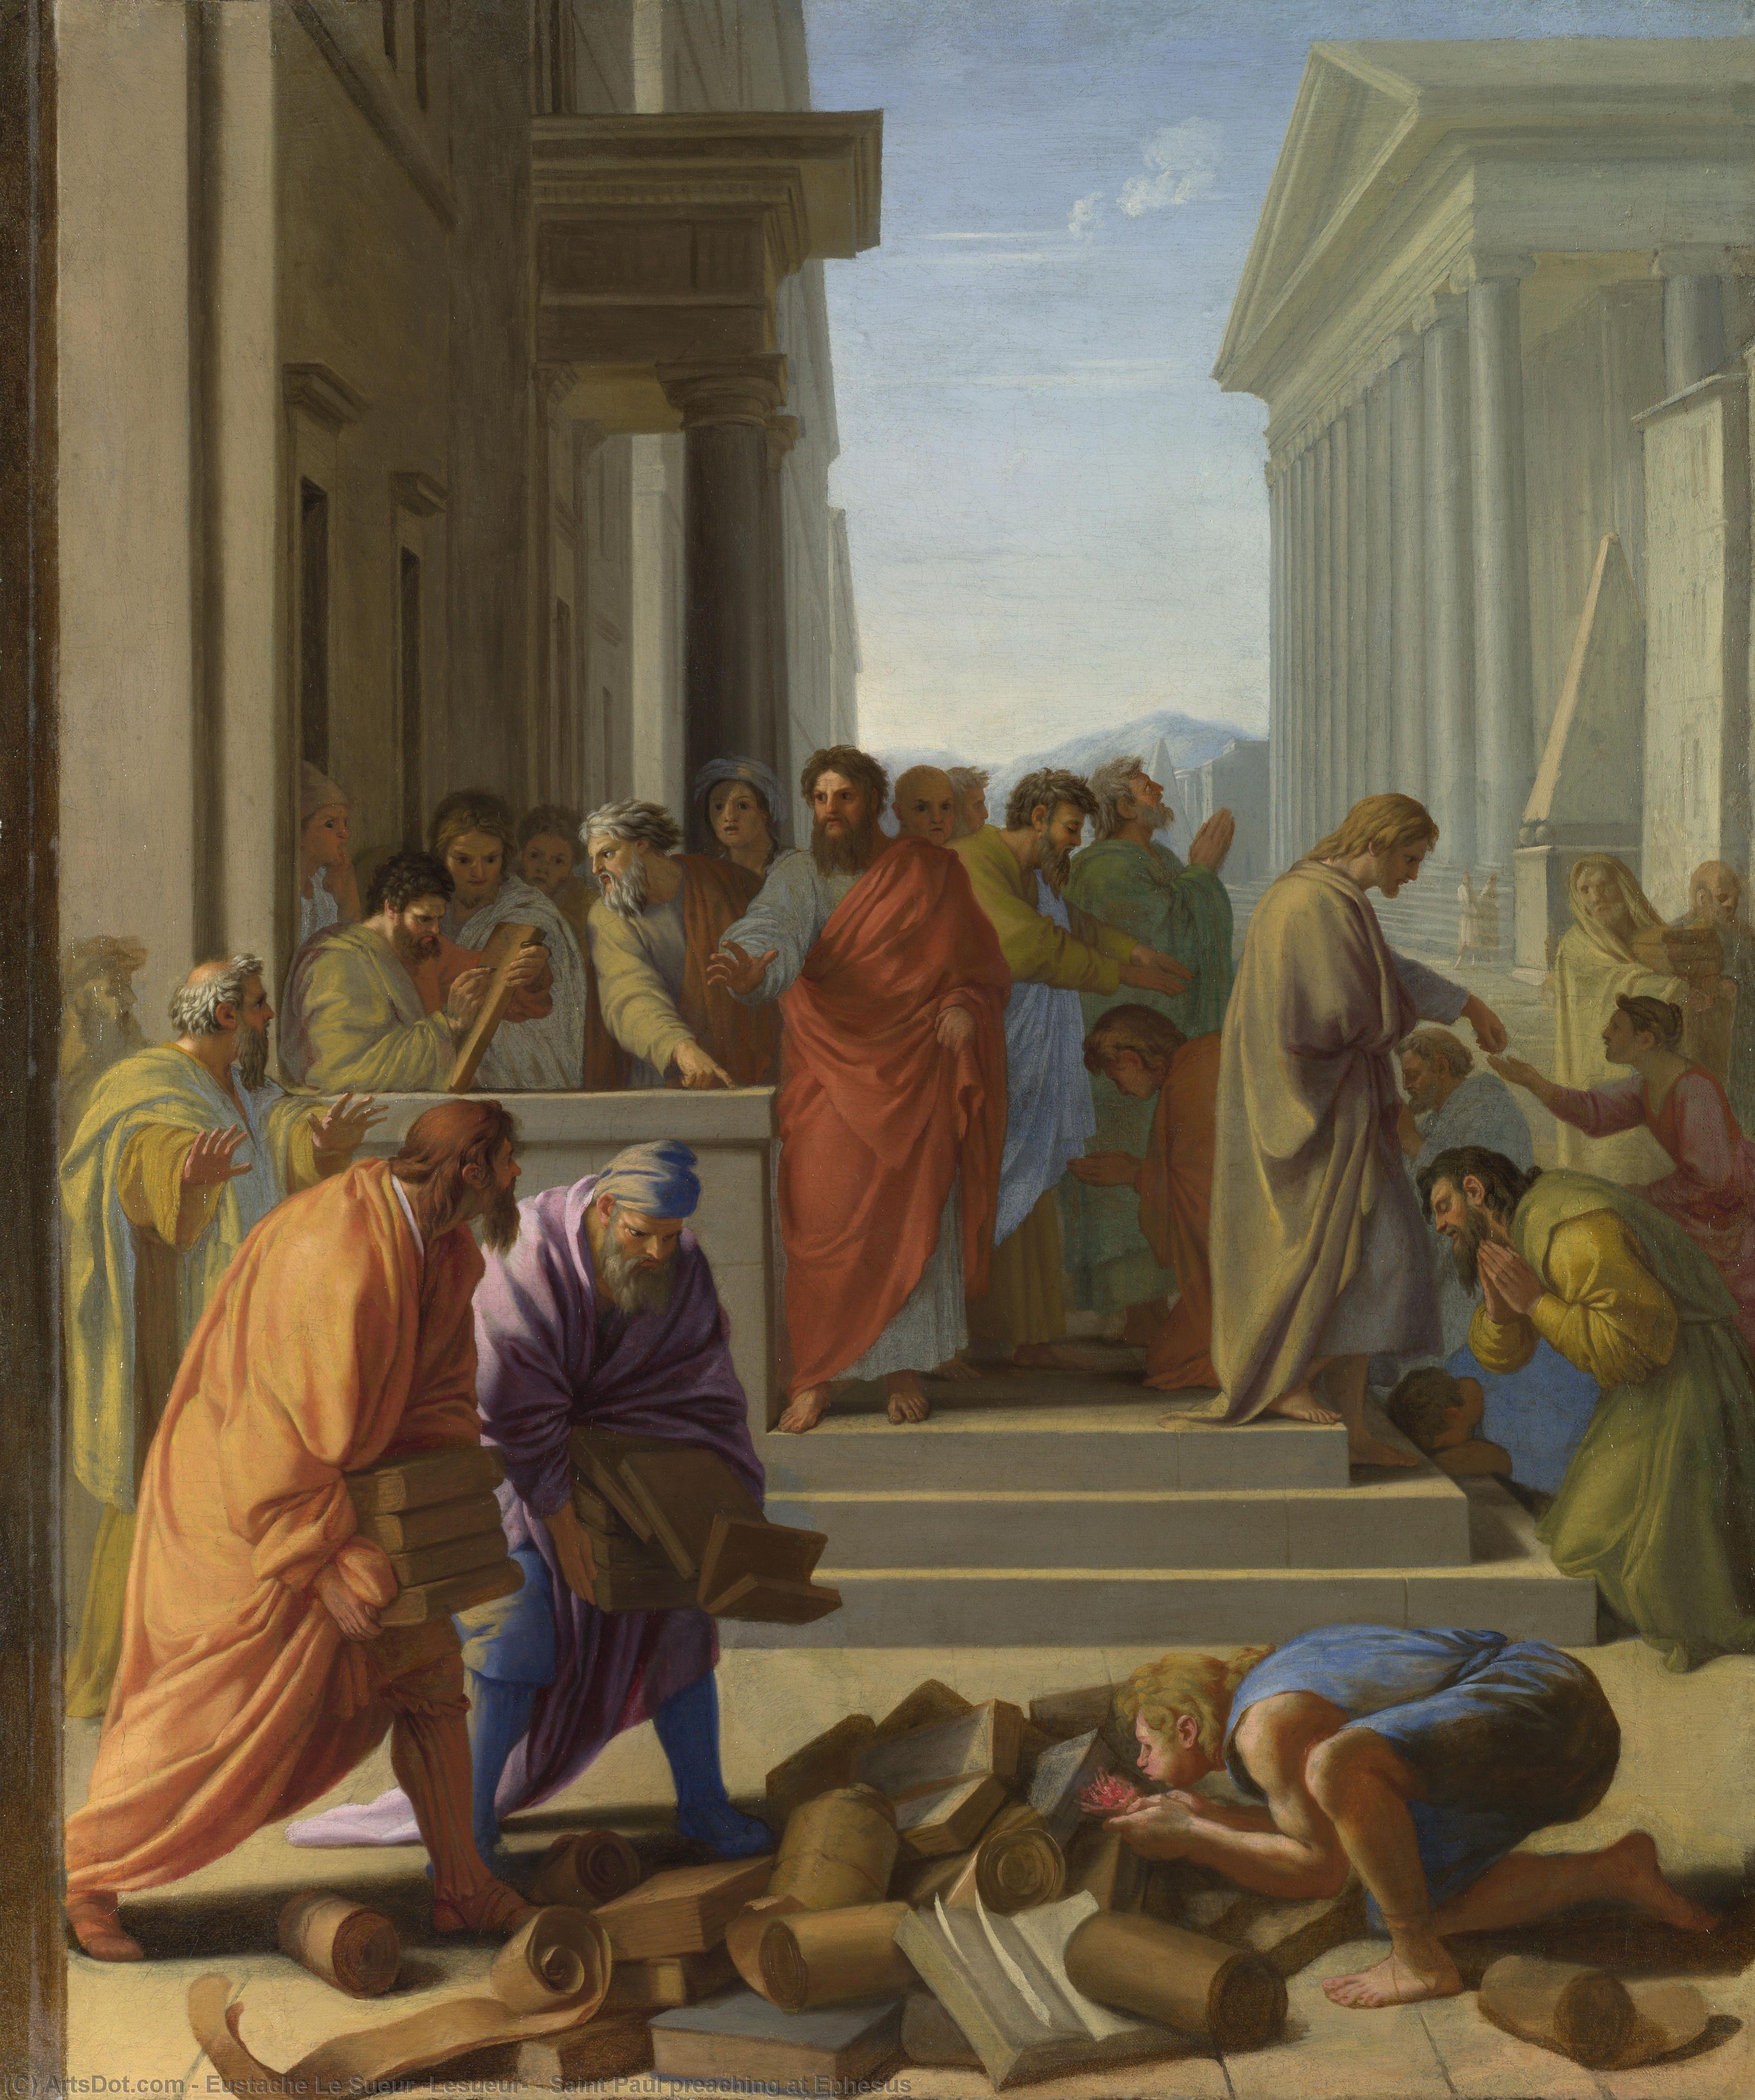 保羅在以弗所傳福音。“Paul in Ephesus”, Eustache Le Sueur, 1648-49